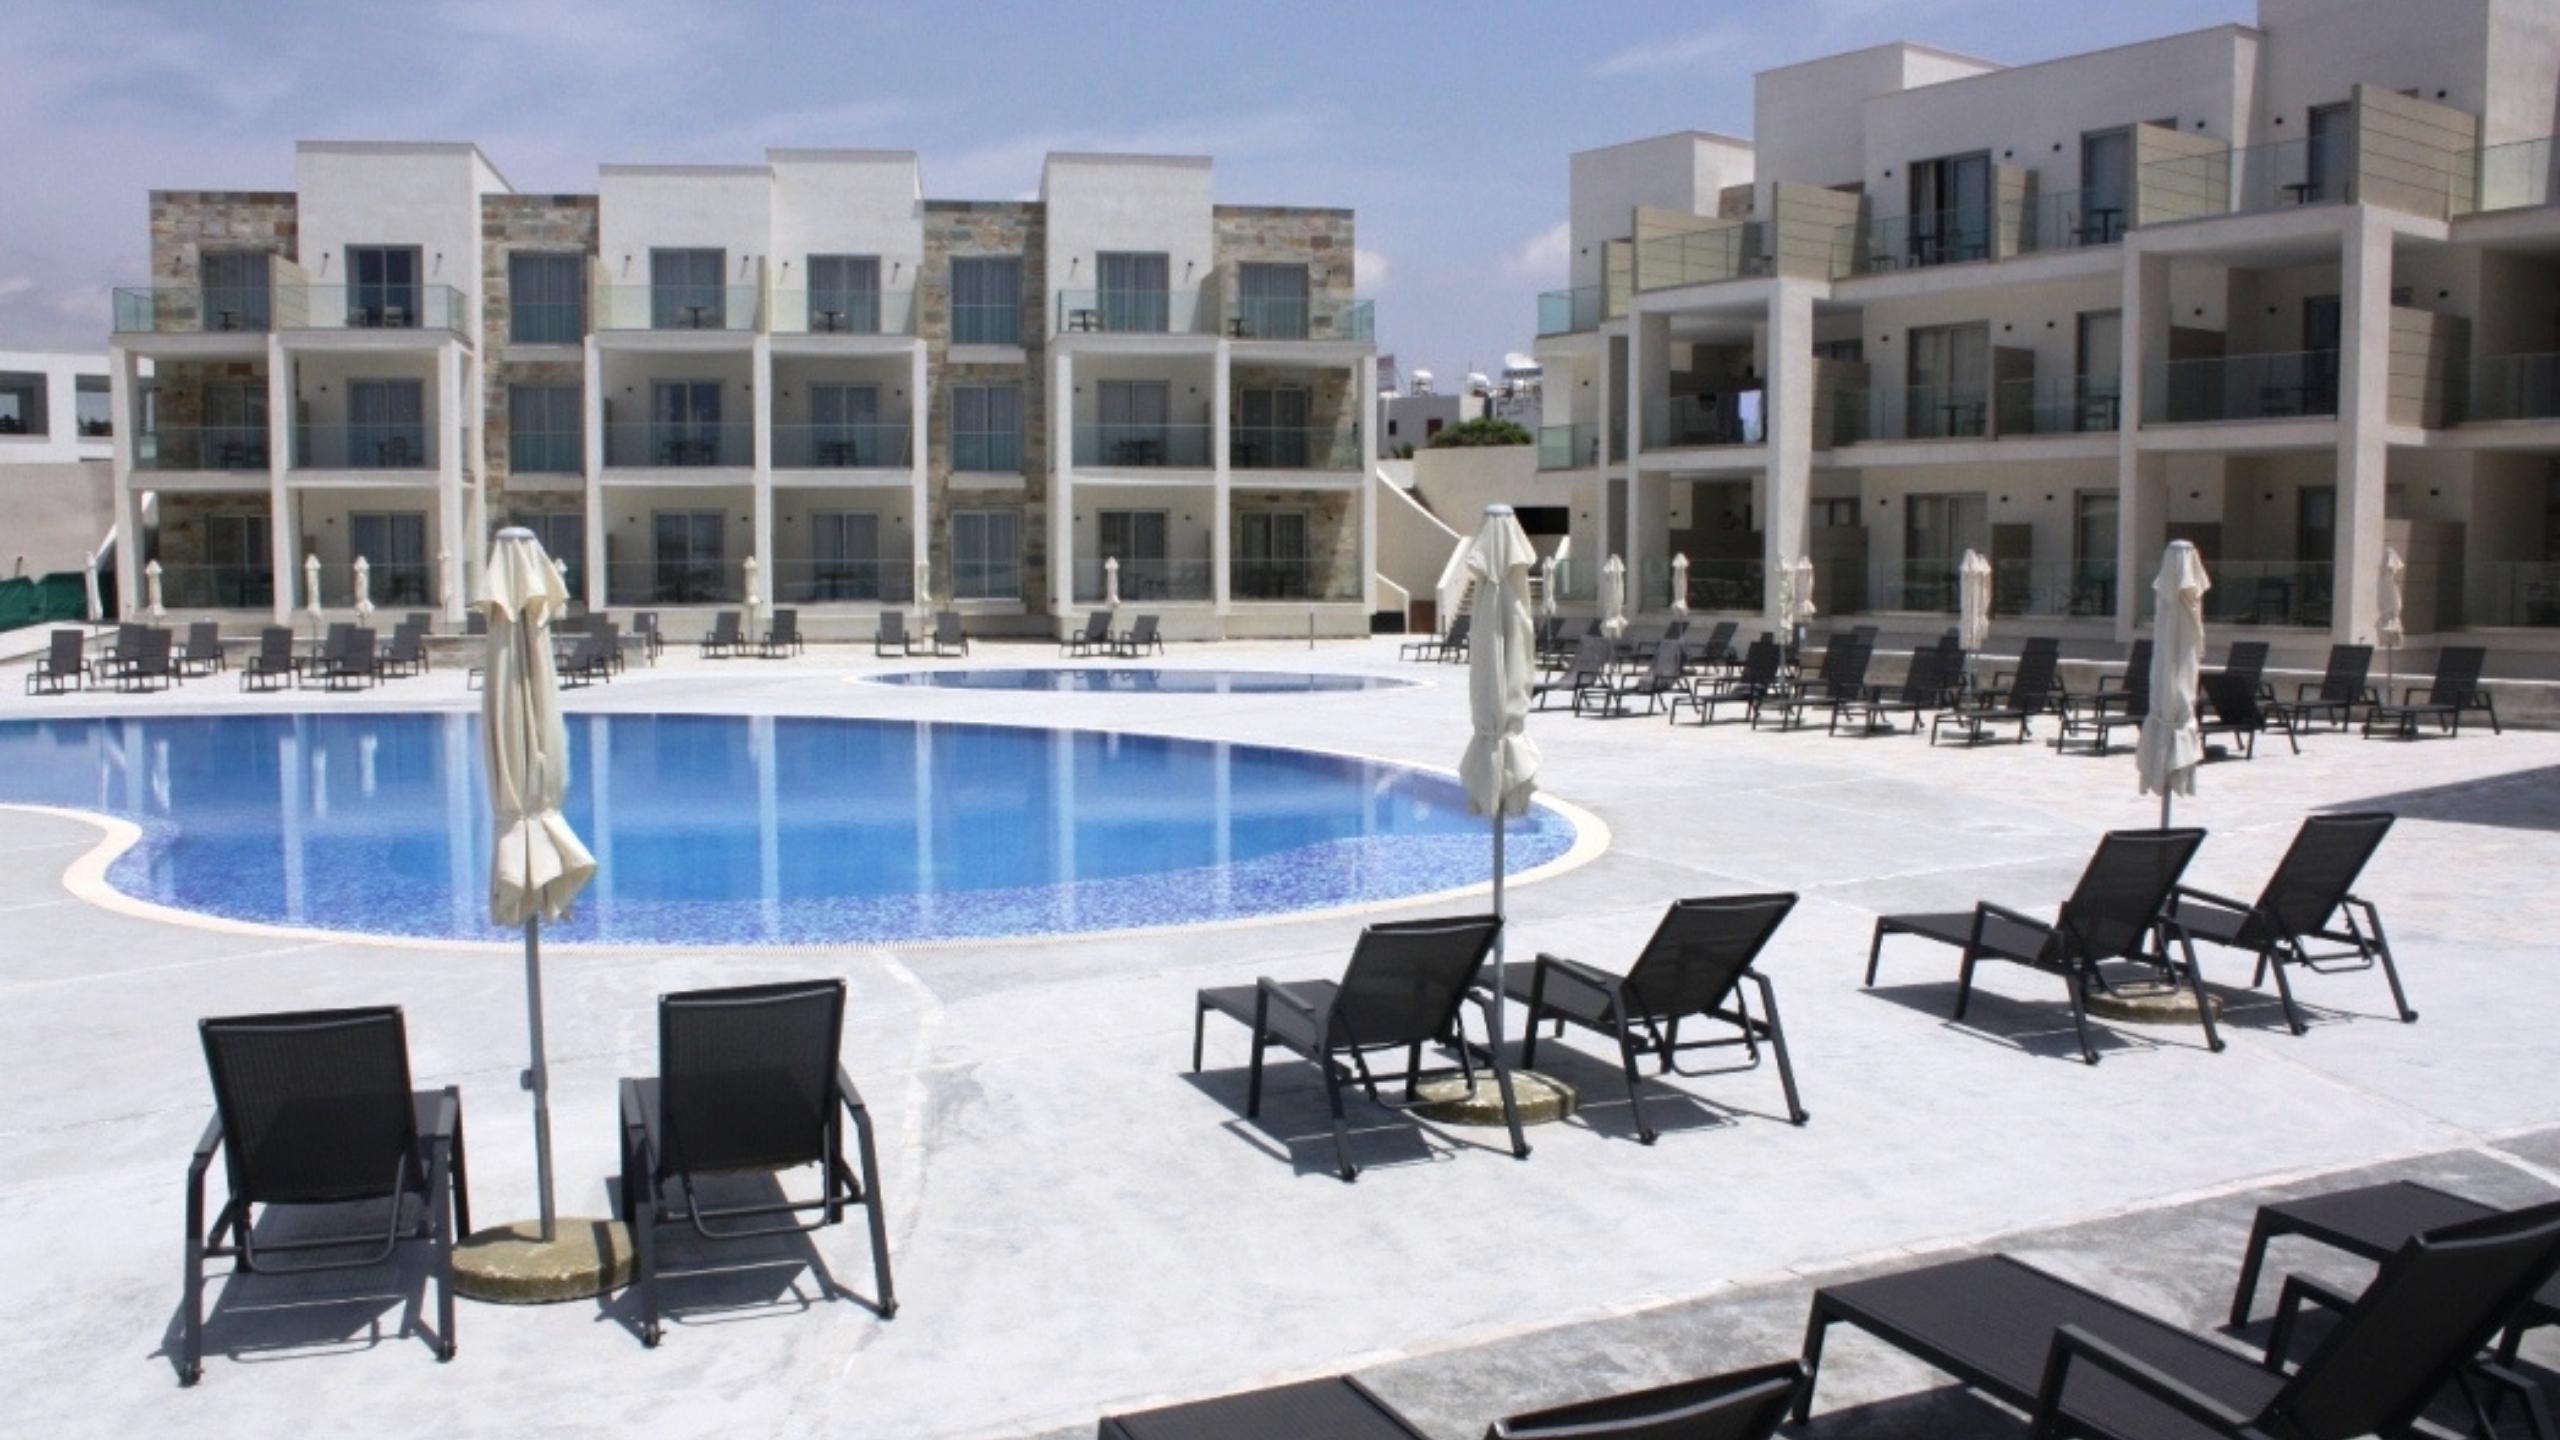 Amphora Hotel & Suites in Cyprus